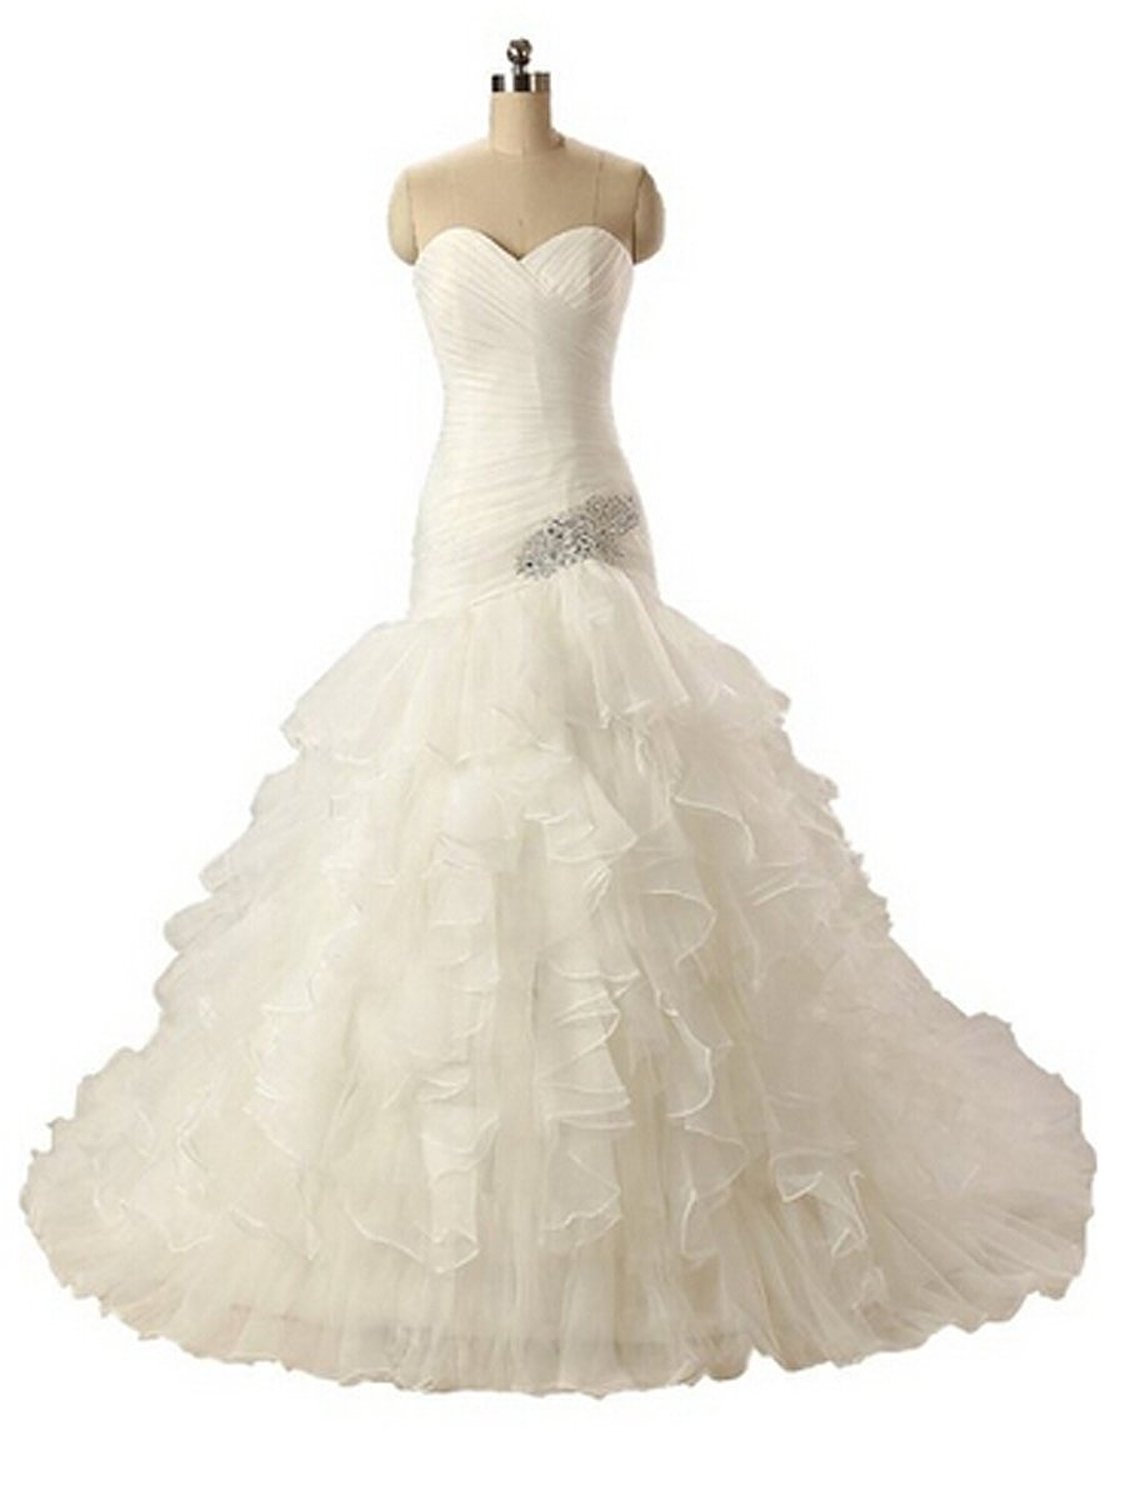 Youthful Sweetheart Ruffle Organza Beading Ball Gown Wedding Dress